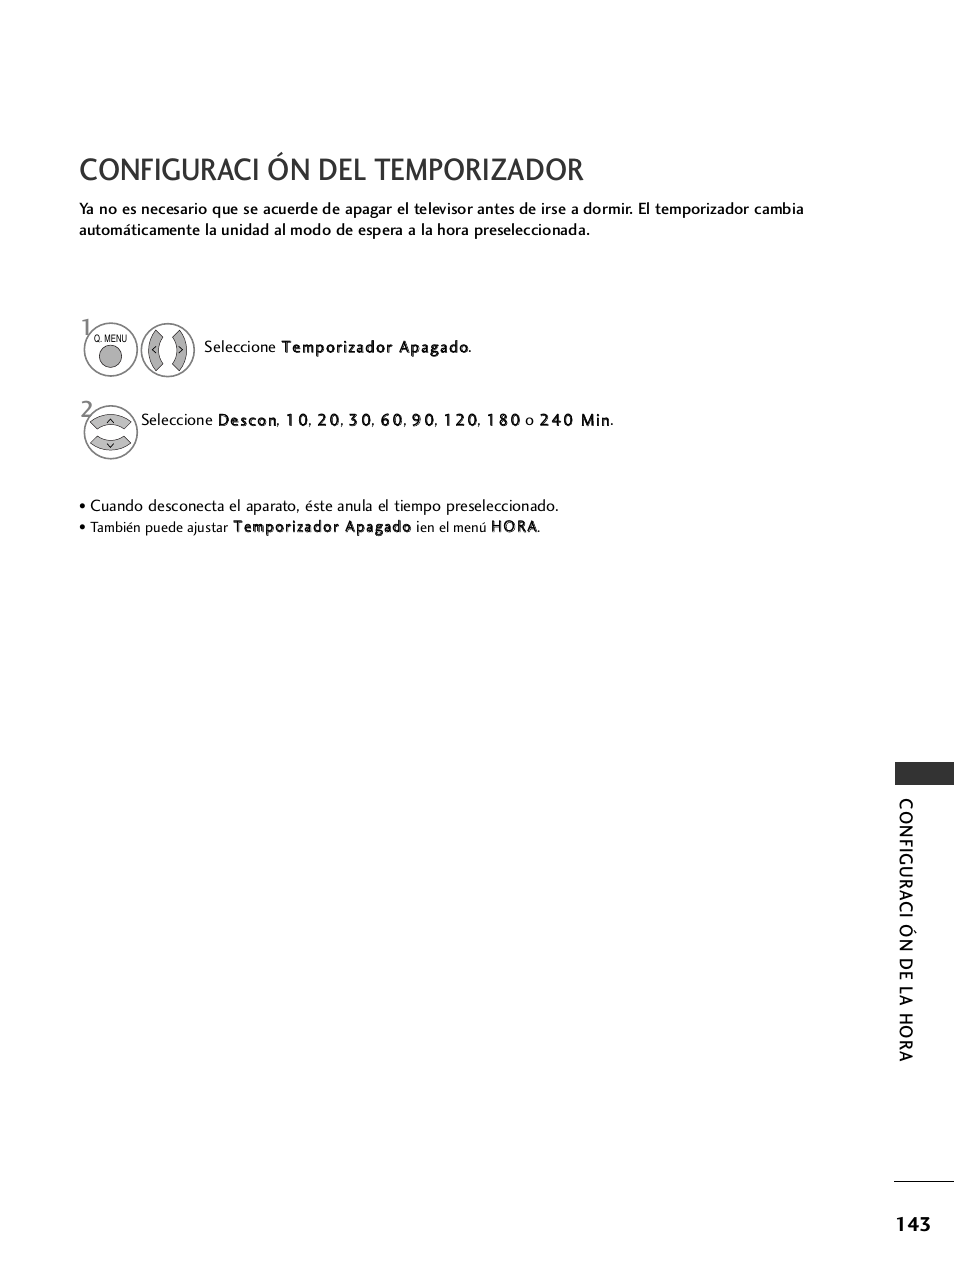 Configuraci ón del temporizador | LG 32LH40 Manual del usuario | Página 145 / 180